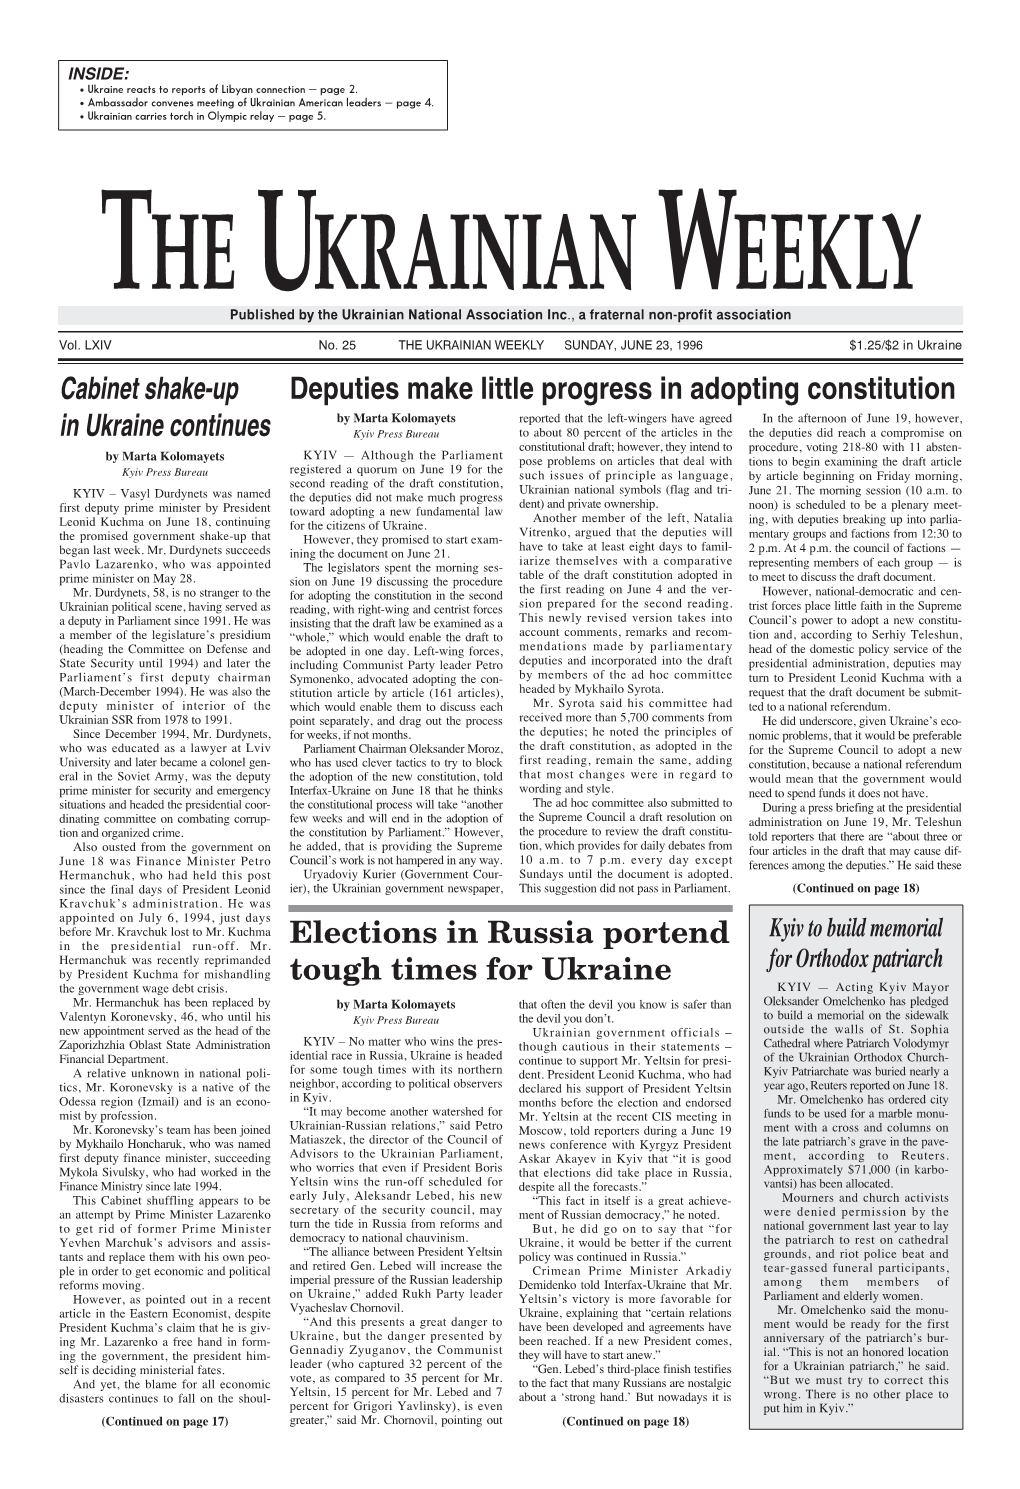 The Ukrainian Weekly 1996, No.25